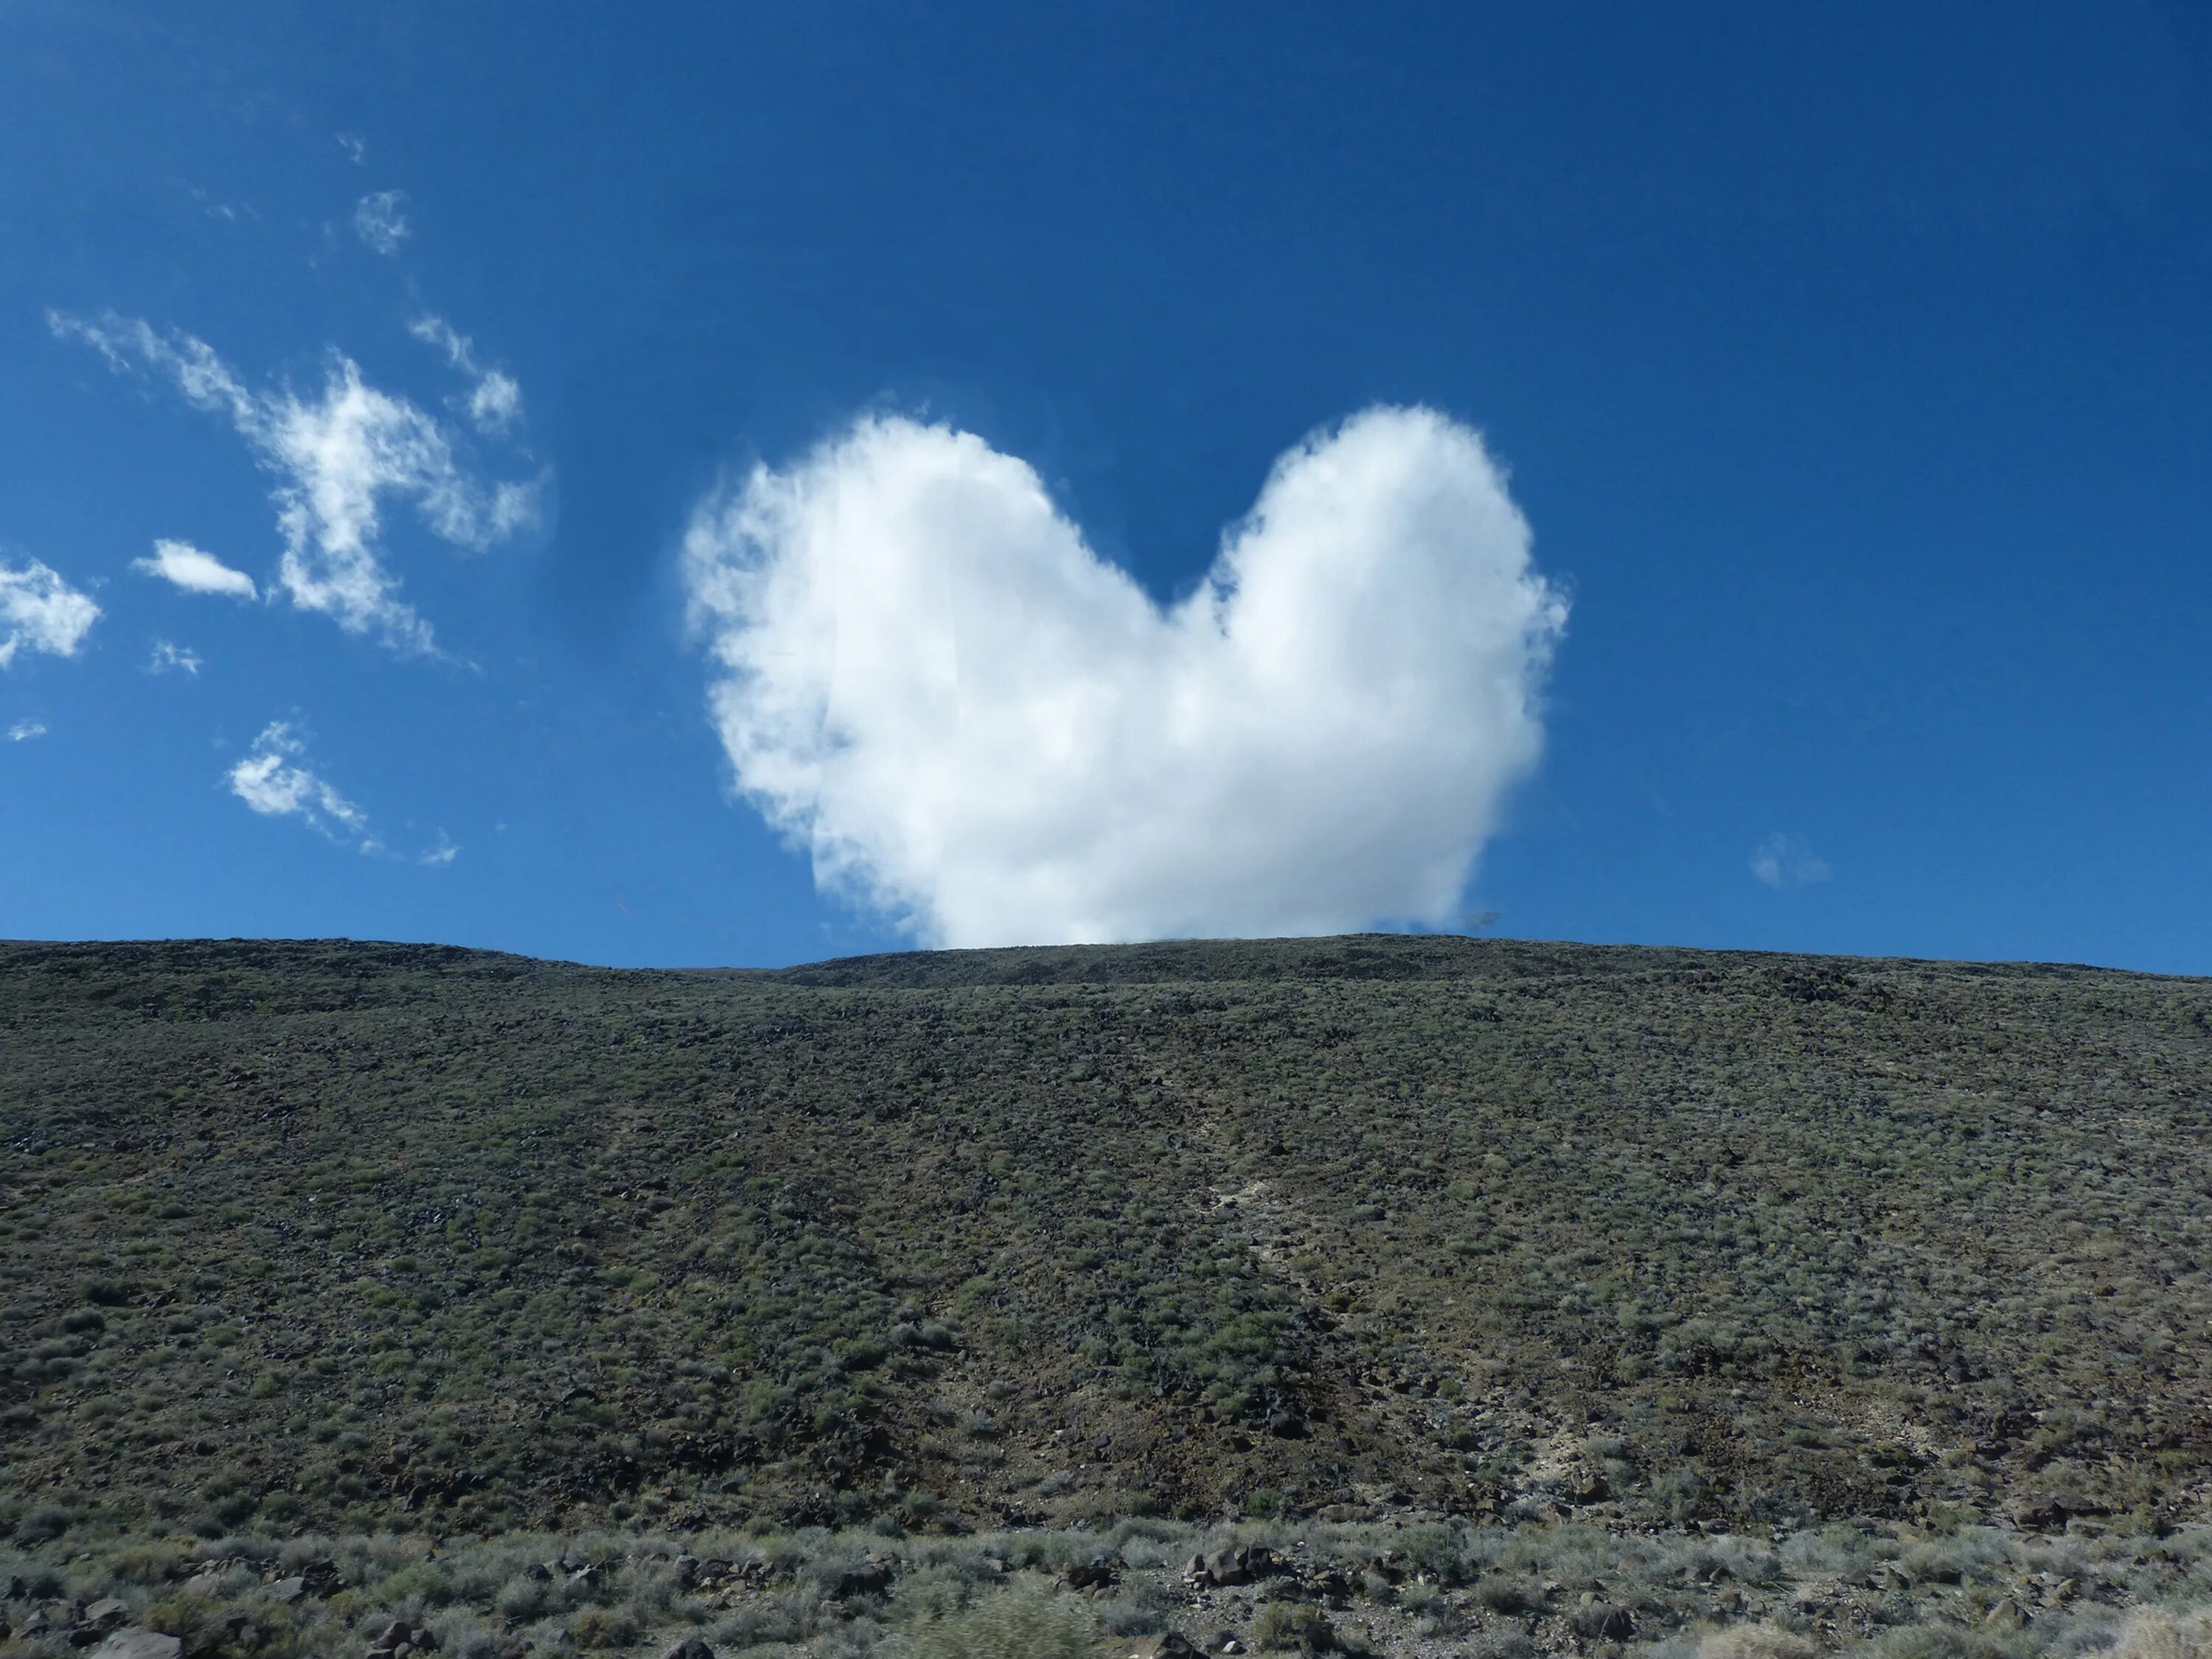 Хенун облако. Облака. Сердце из облаков. Облако в форме сердца. Виды облаков.